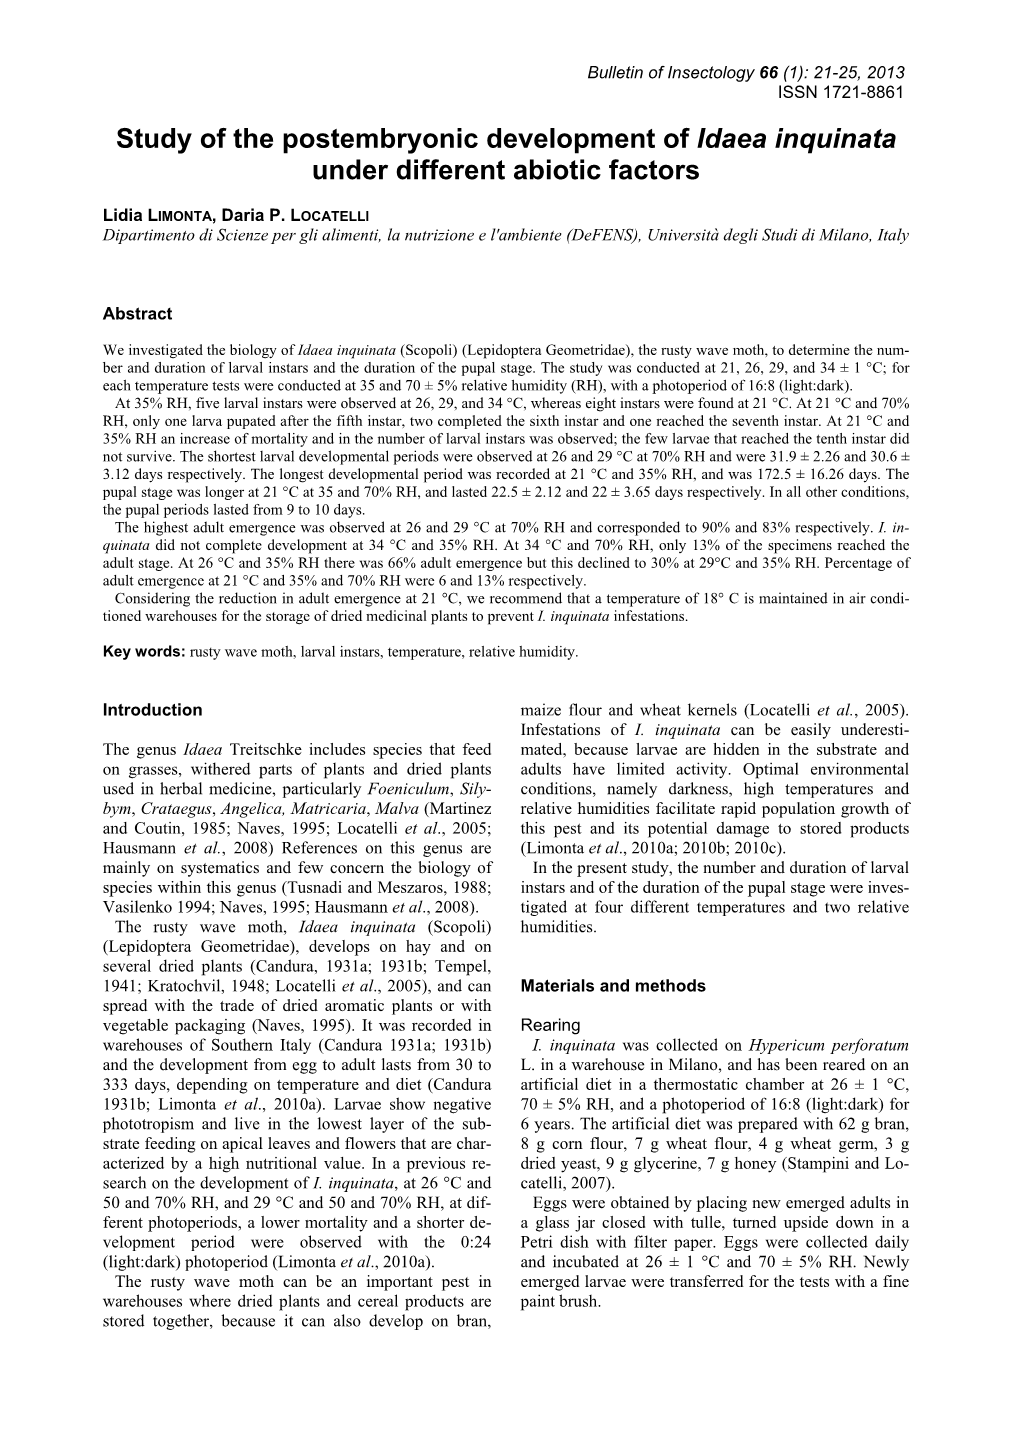 Study of the Postembryonic Development of Idaea Inquinata Under Different Abiotic Factors